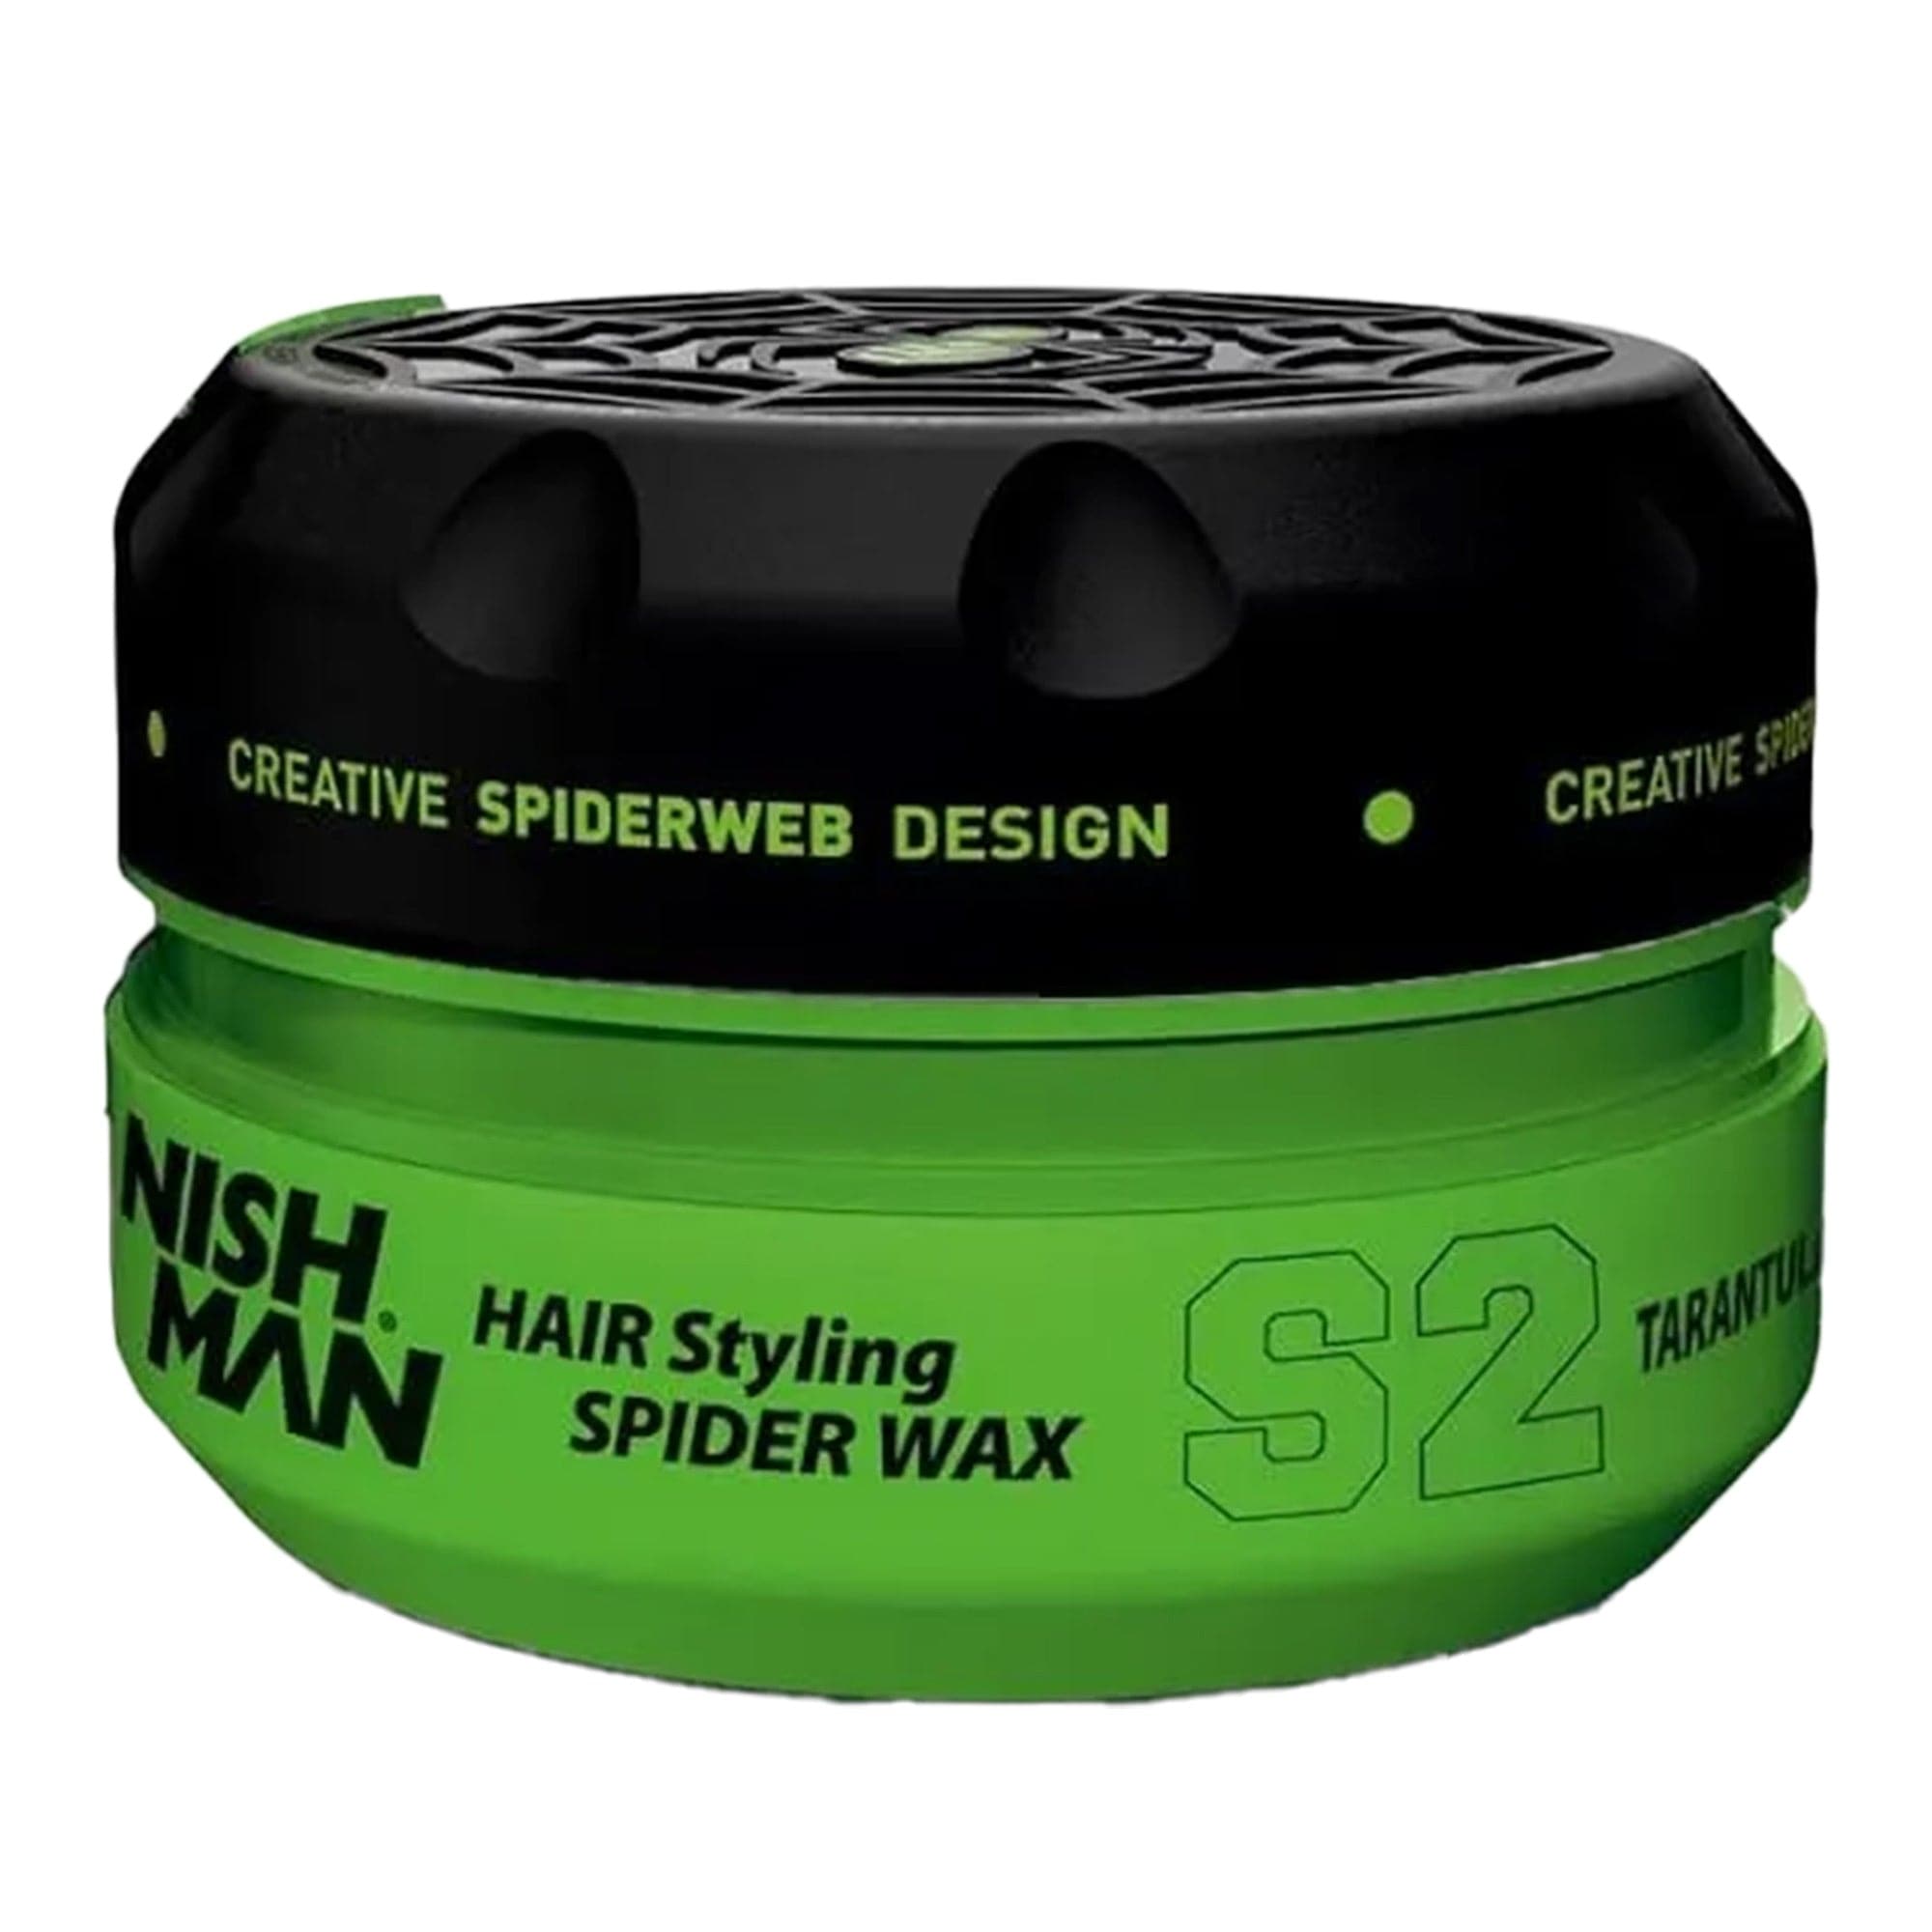 Nishman - Hair Styling Spider Wax S2 Tarantula 150ml